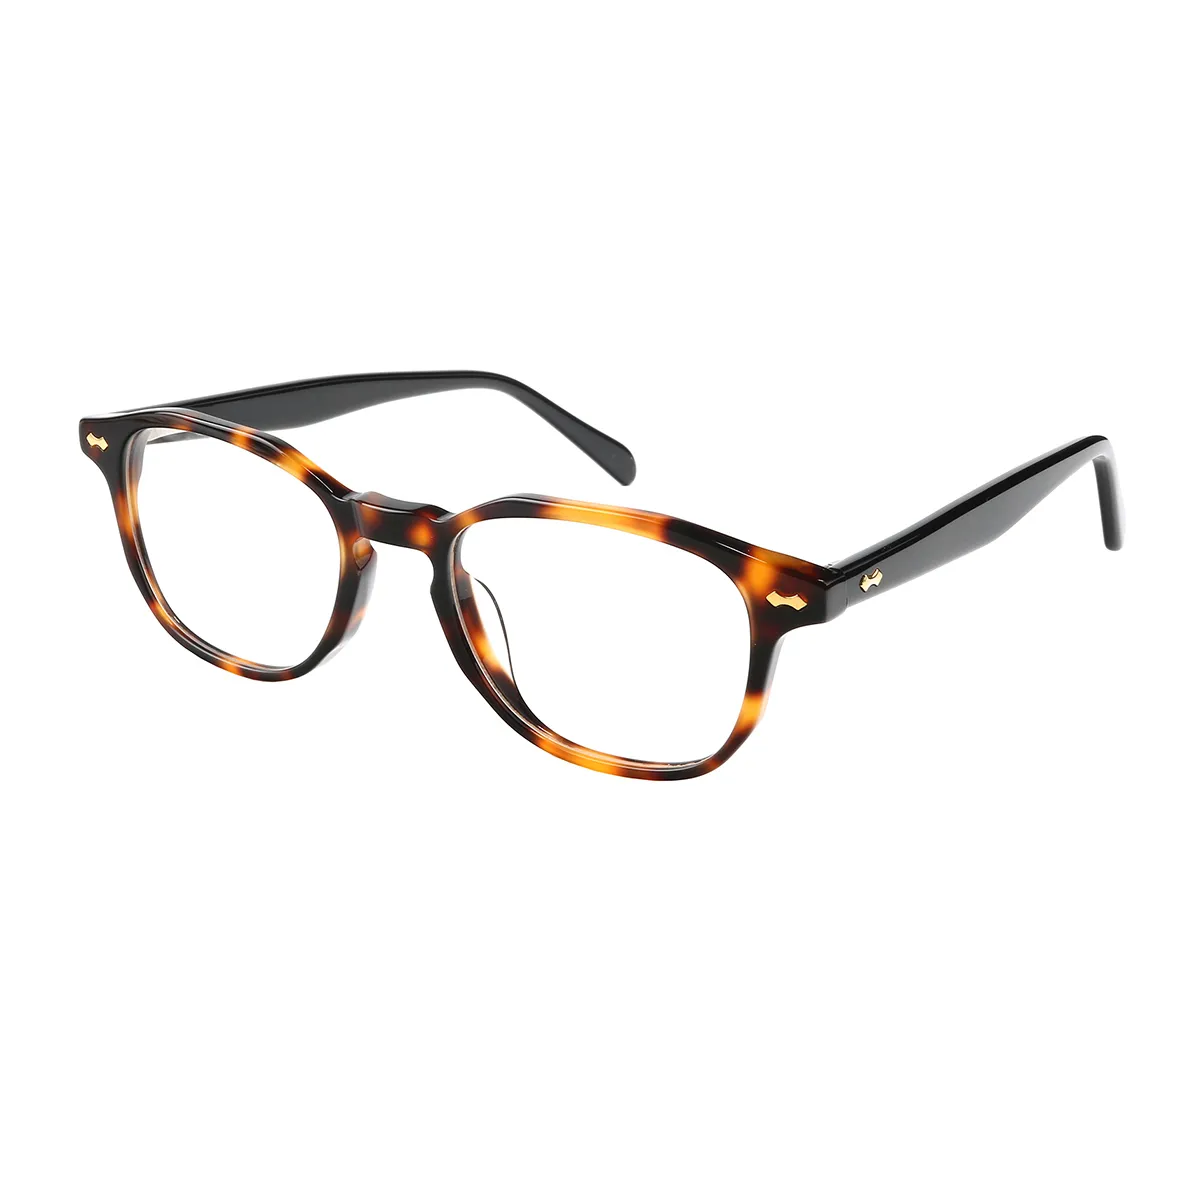 Allais - Square Tortoiseshell Glasses for Men & Women - EFE